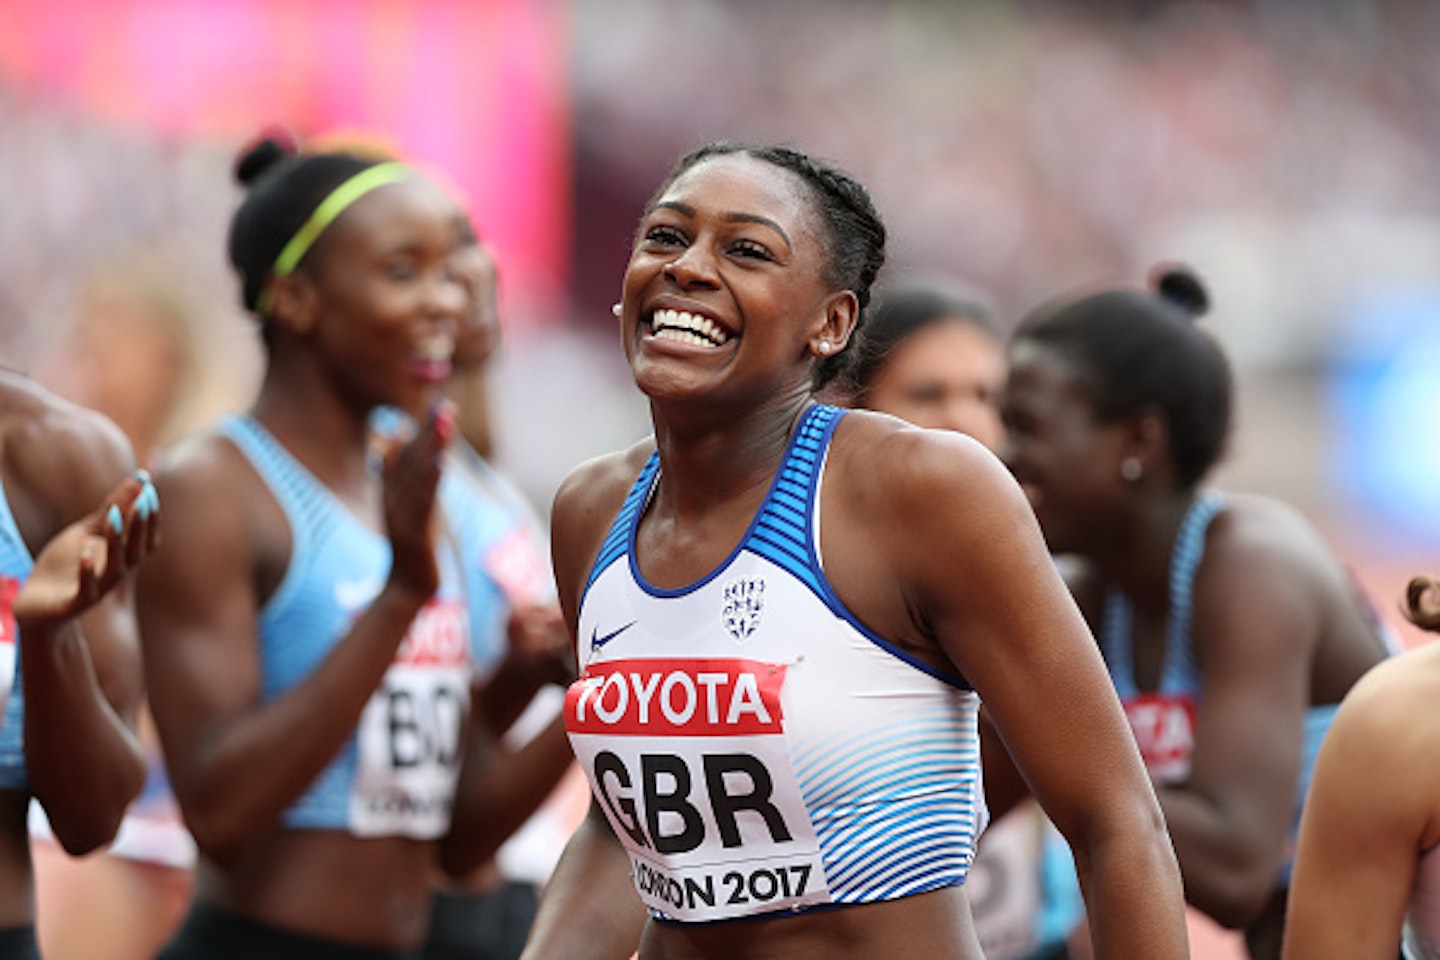 London Olympic hopefuls: Perri Shakes-Drayton, Athletics